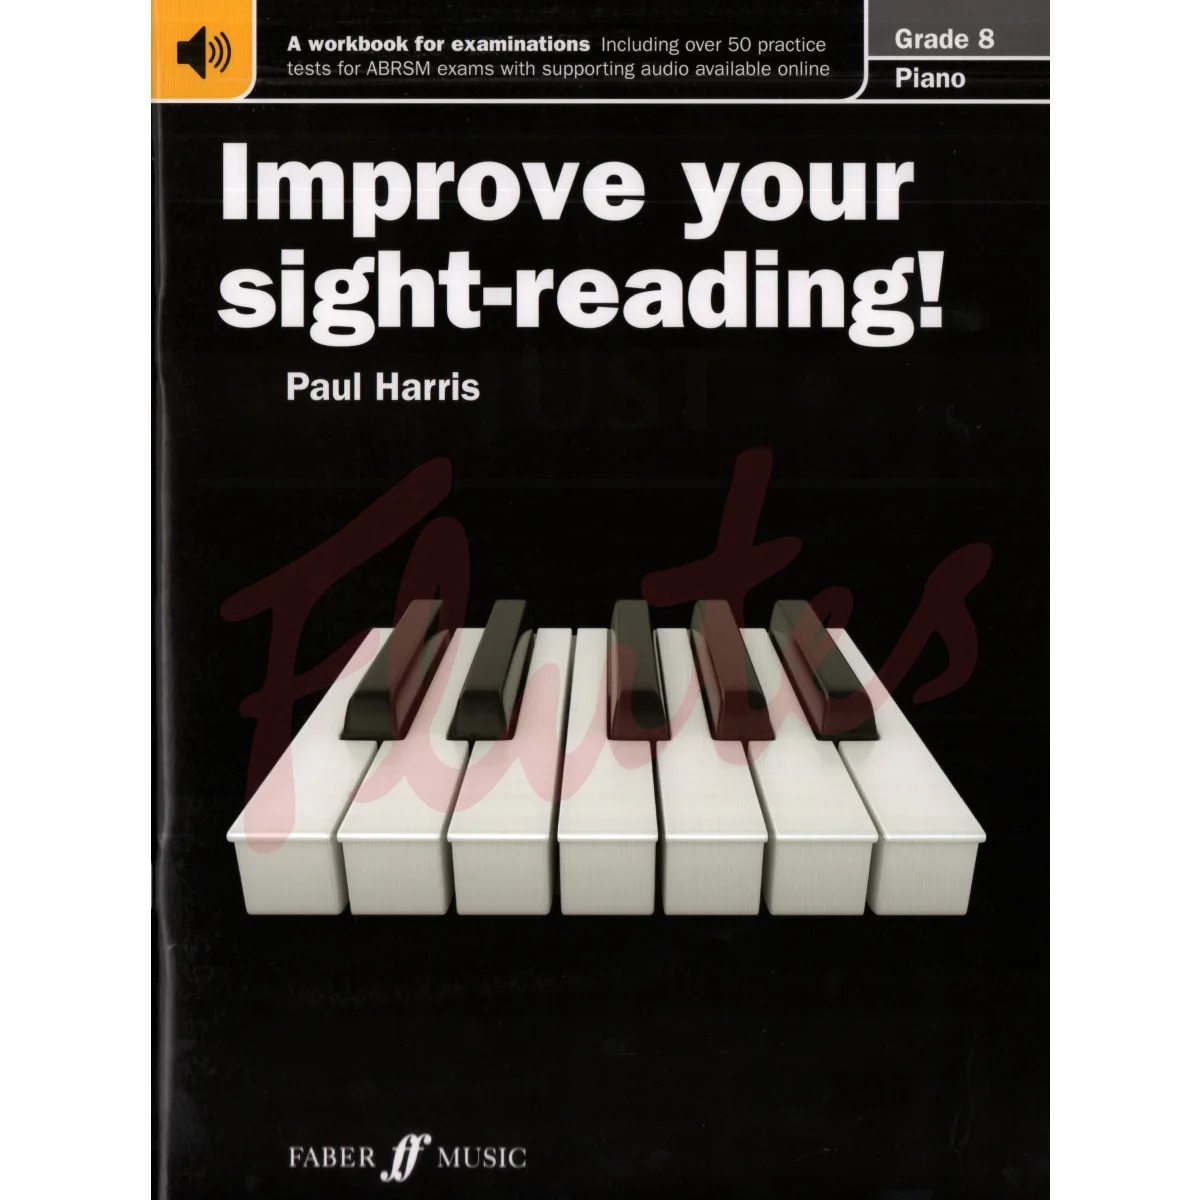 Improve Your Sight-Reading! [Piano] Grade 8